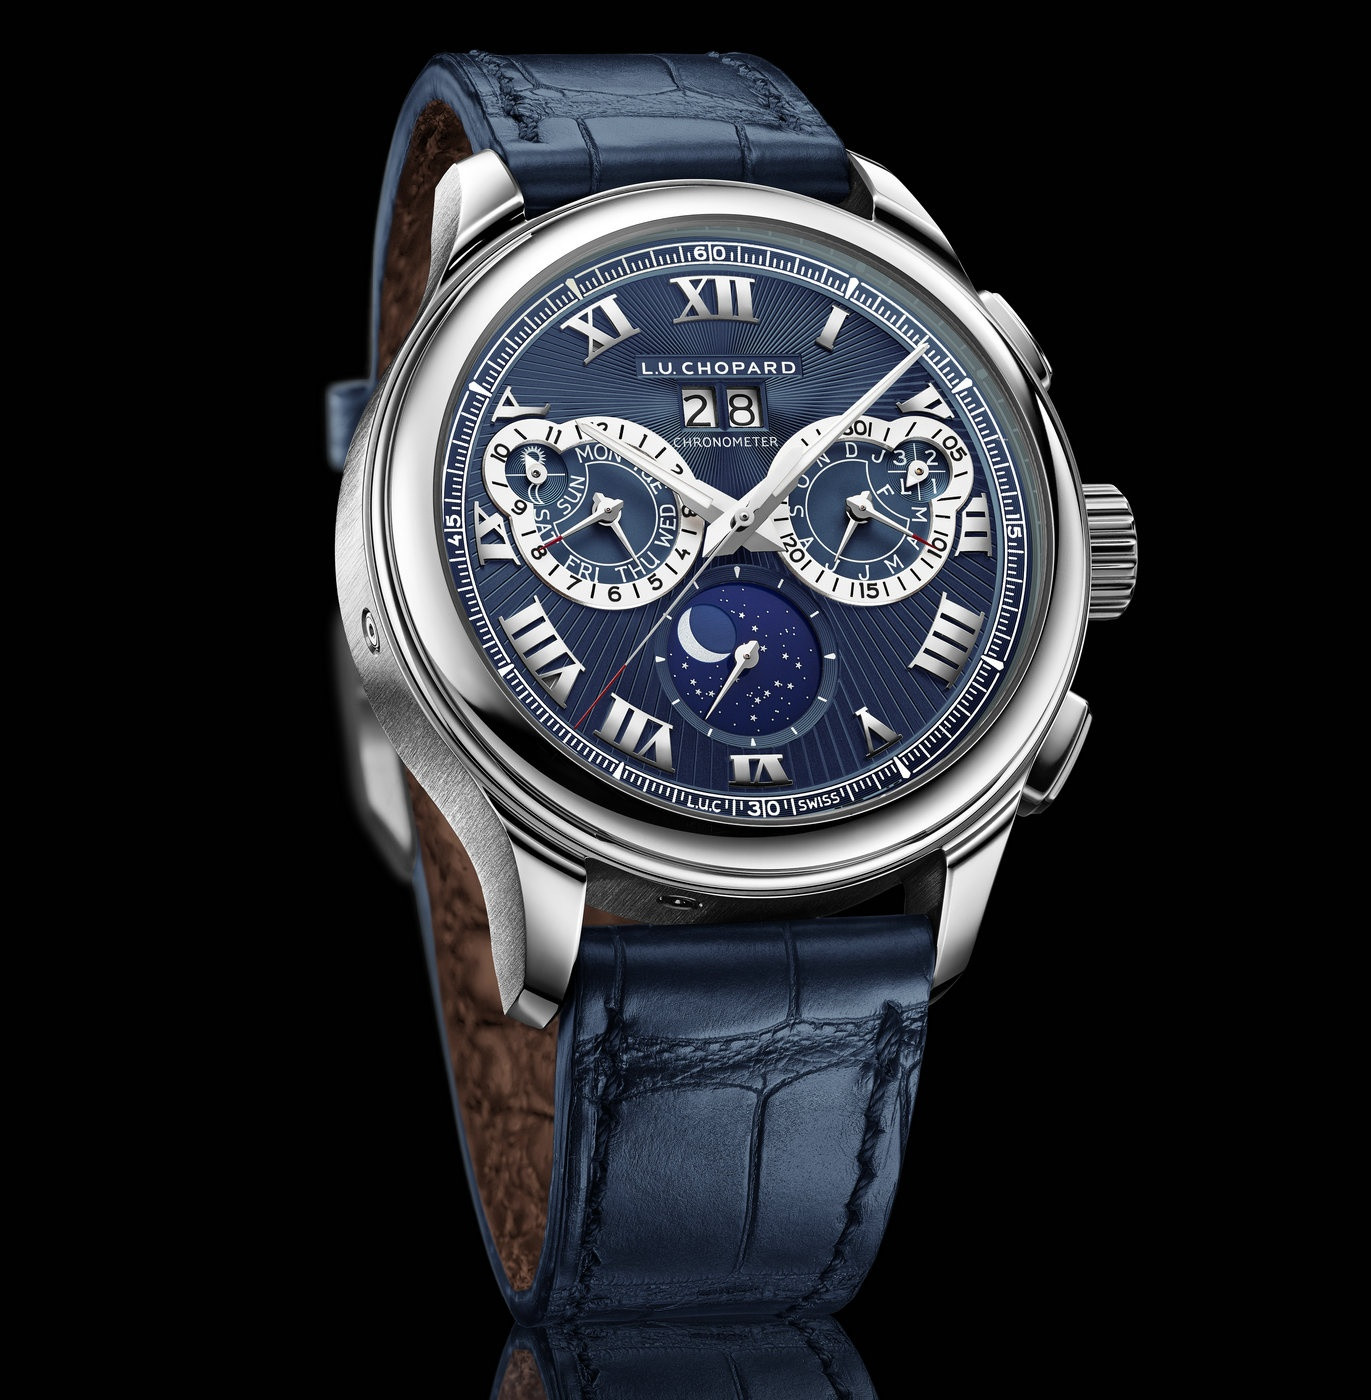 The platinum copy watches have blue dials.